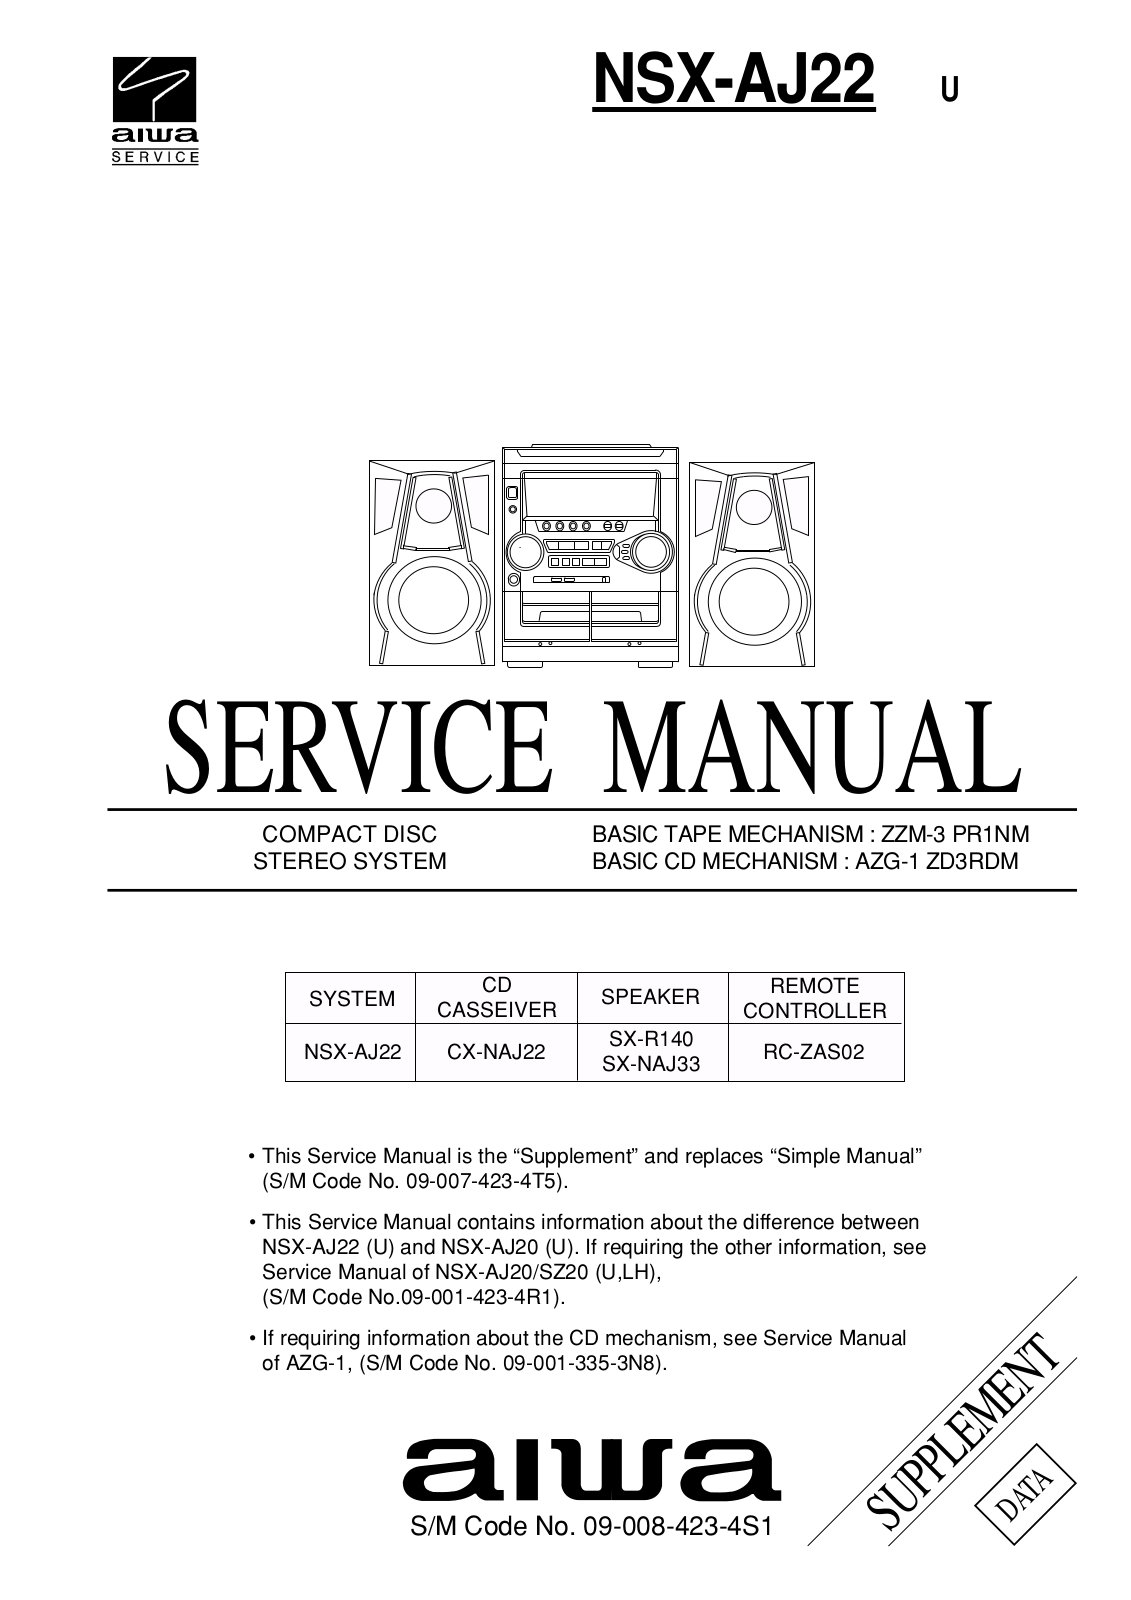 AIWA NSXAJ22B Service Manual